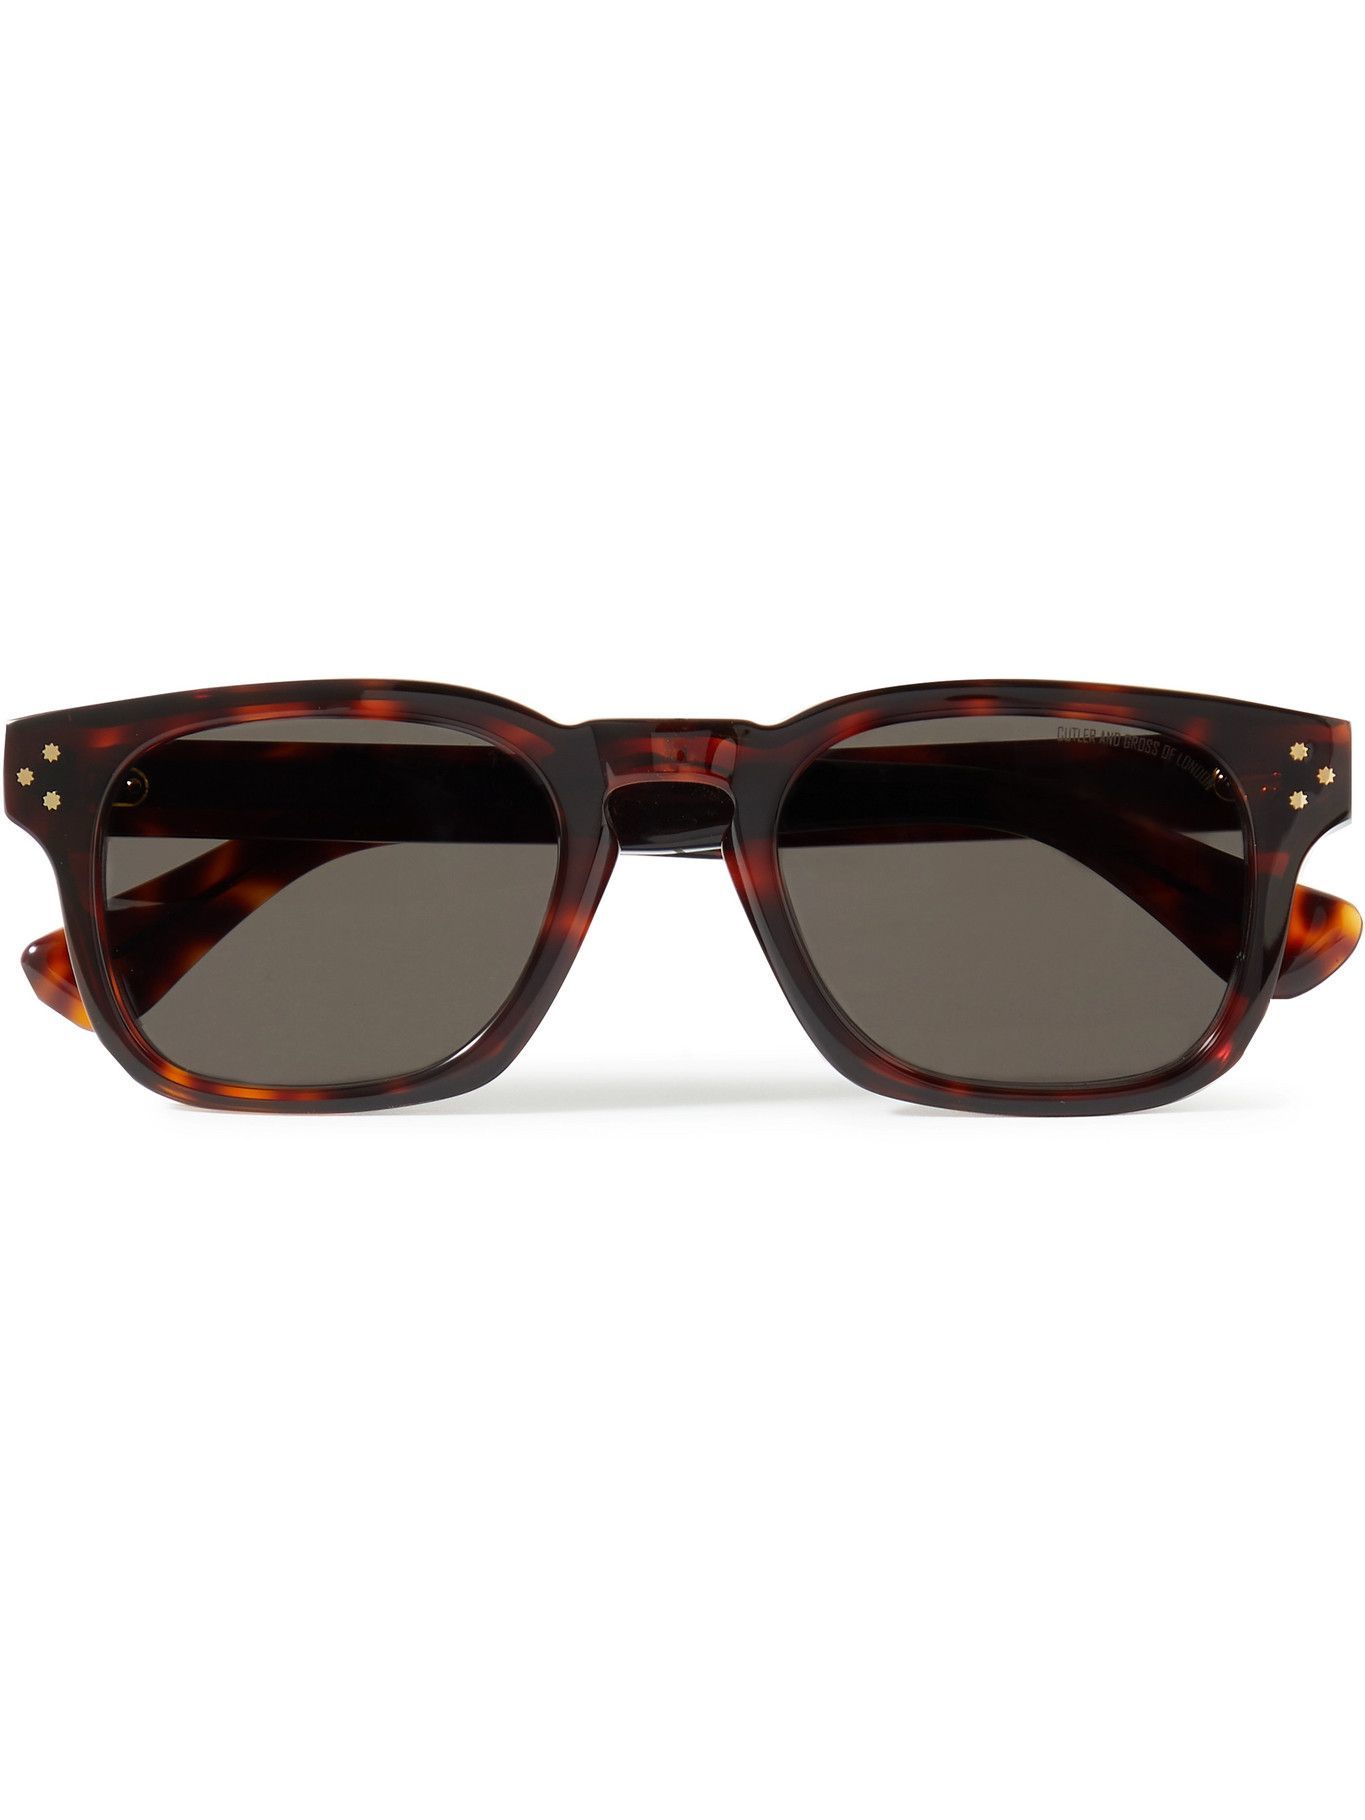 Cutler and Gross - Square-Frame Tortoiseshell Acetate Sunglasses Cutler ...